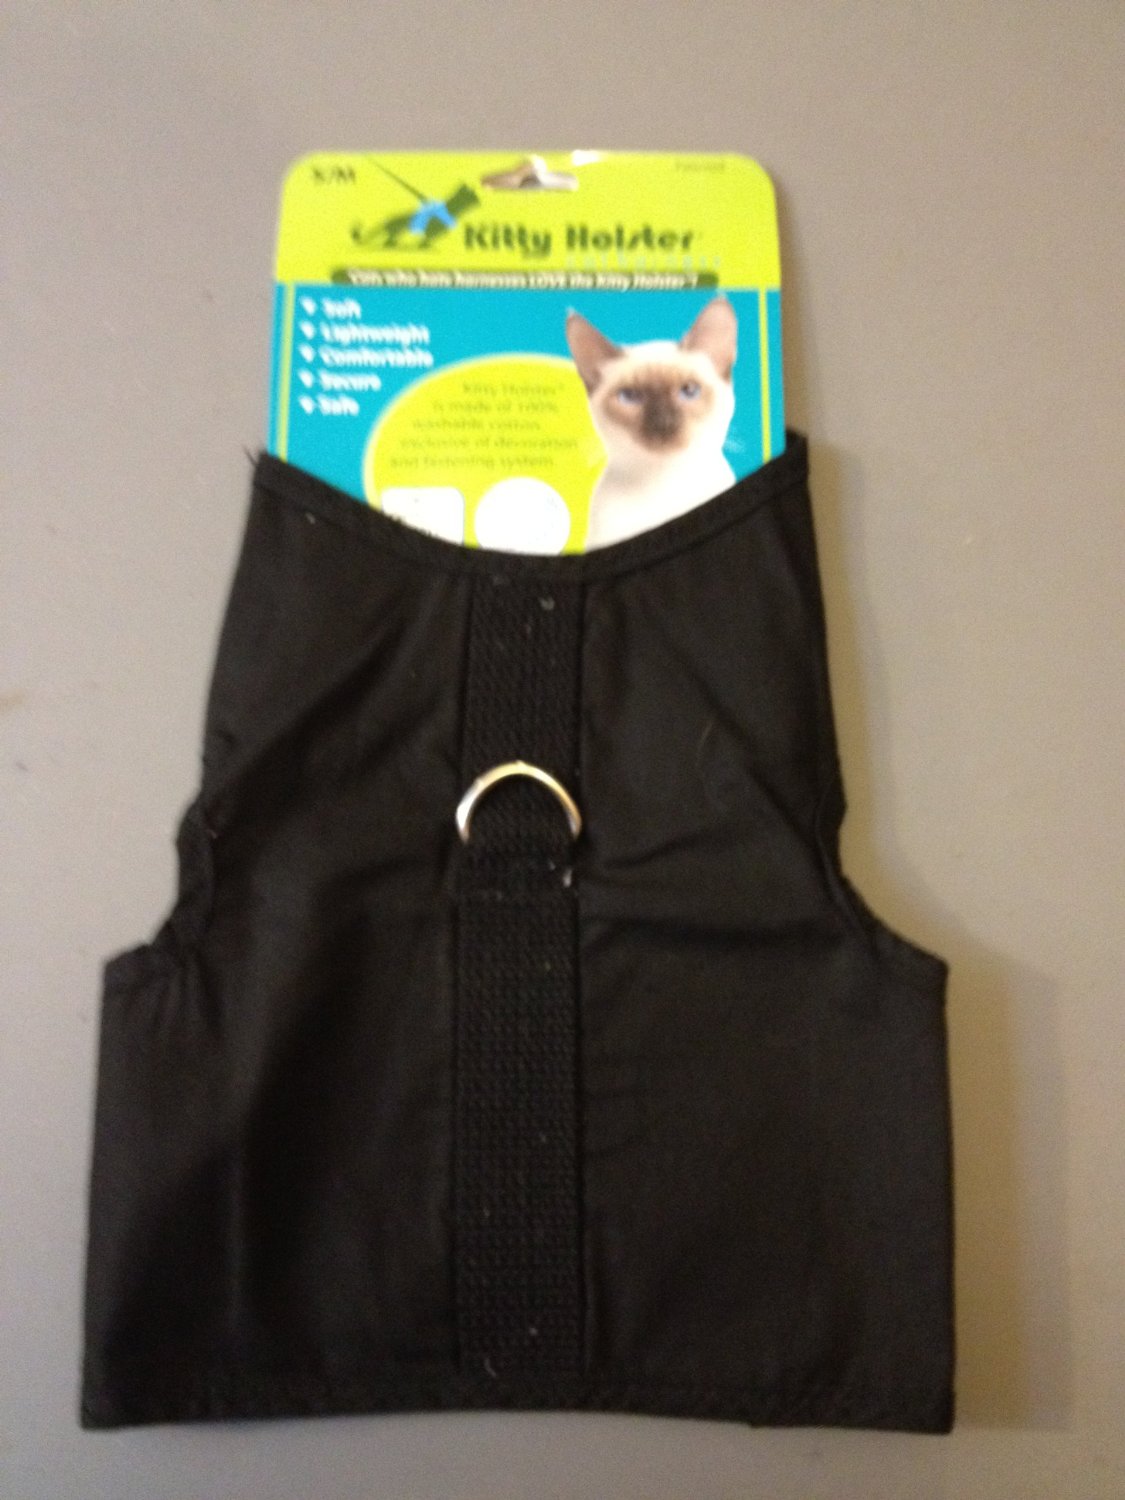 Kitty Holster Cat Harness, Small/Medium, Black - image 1 of 2